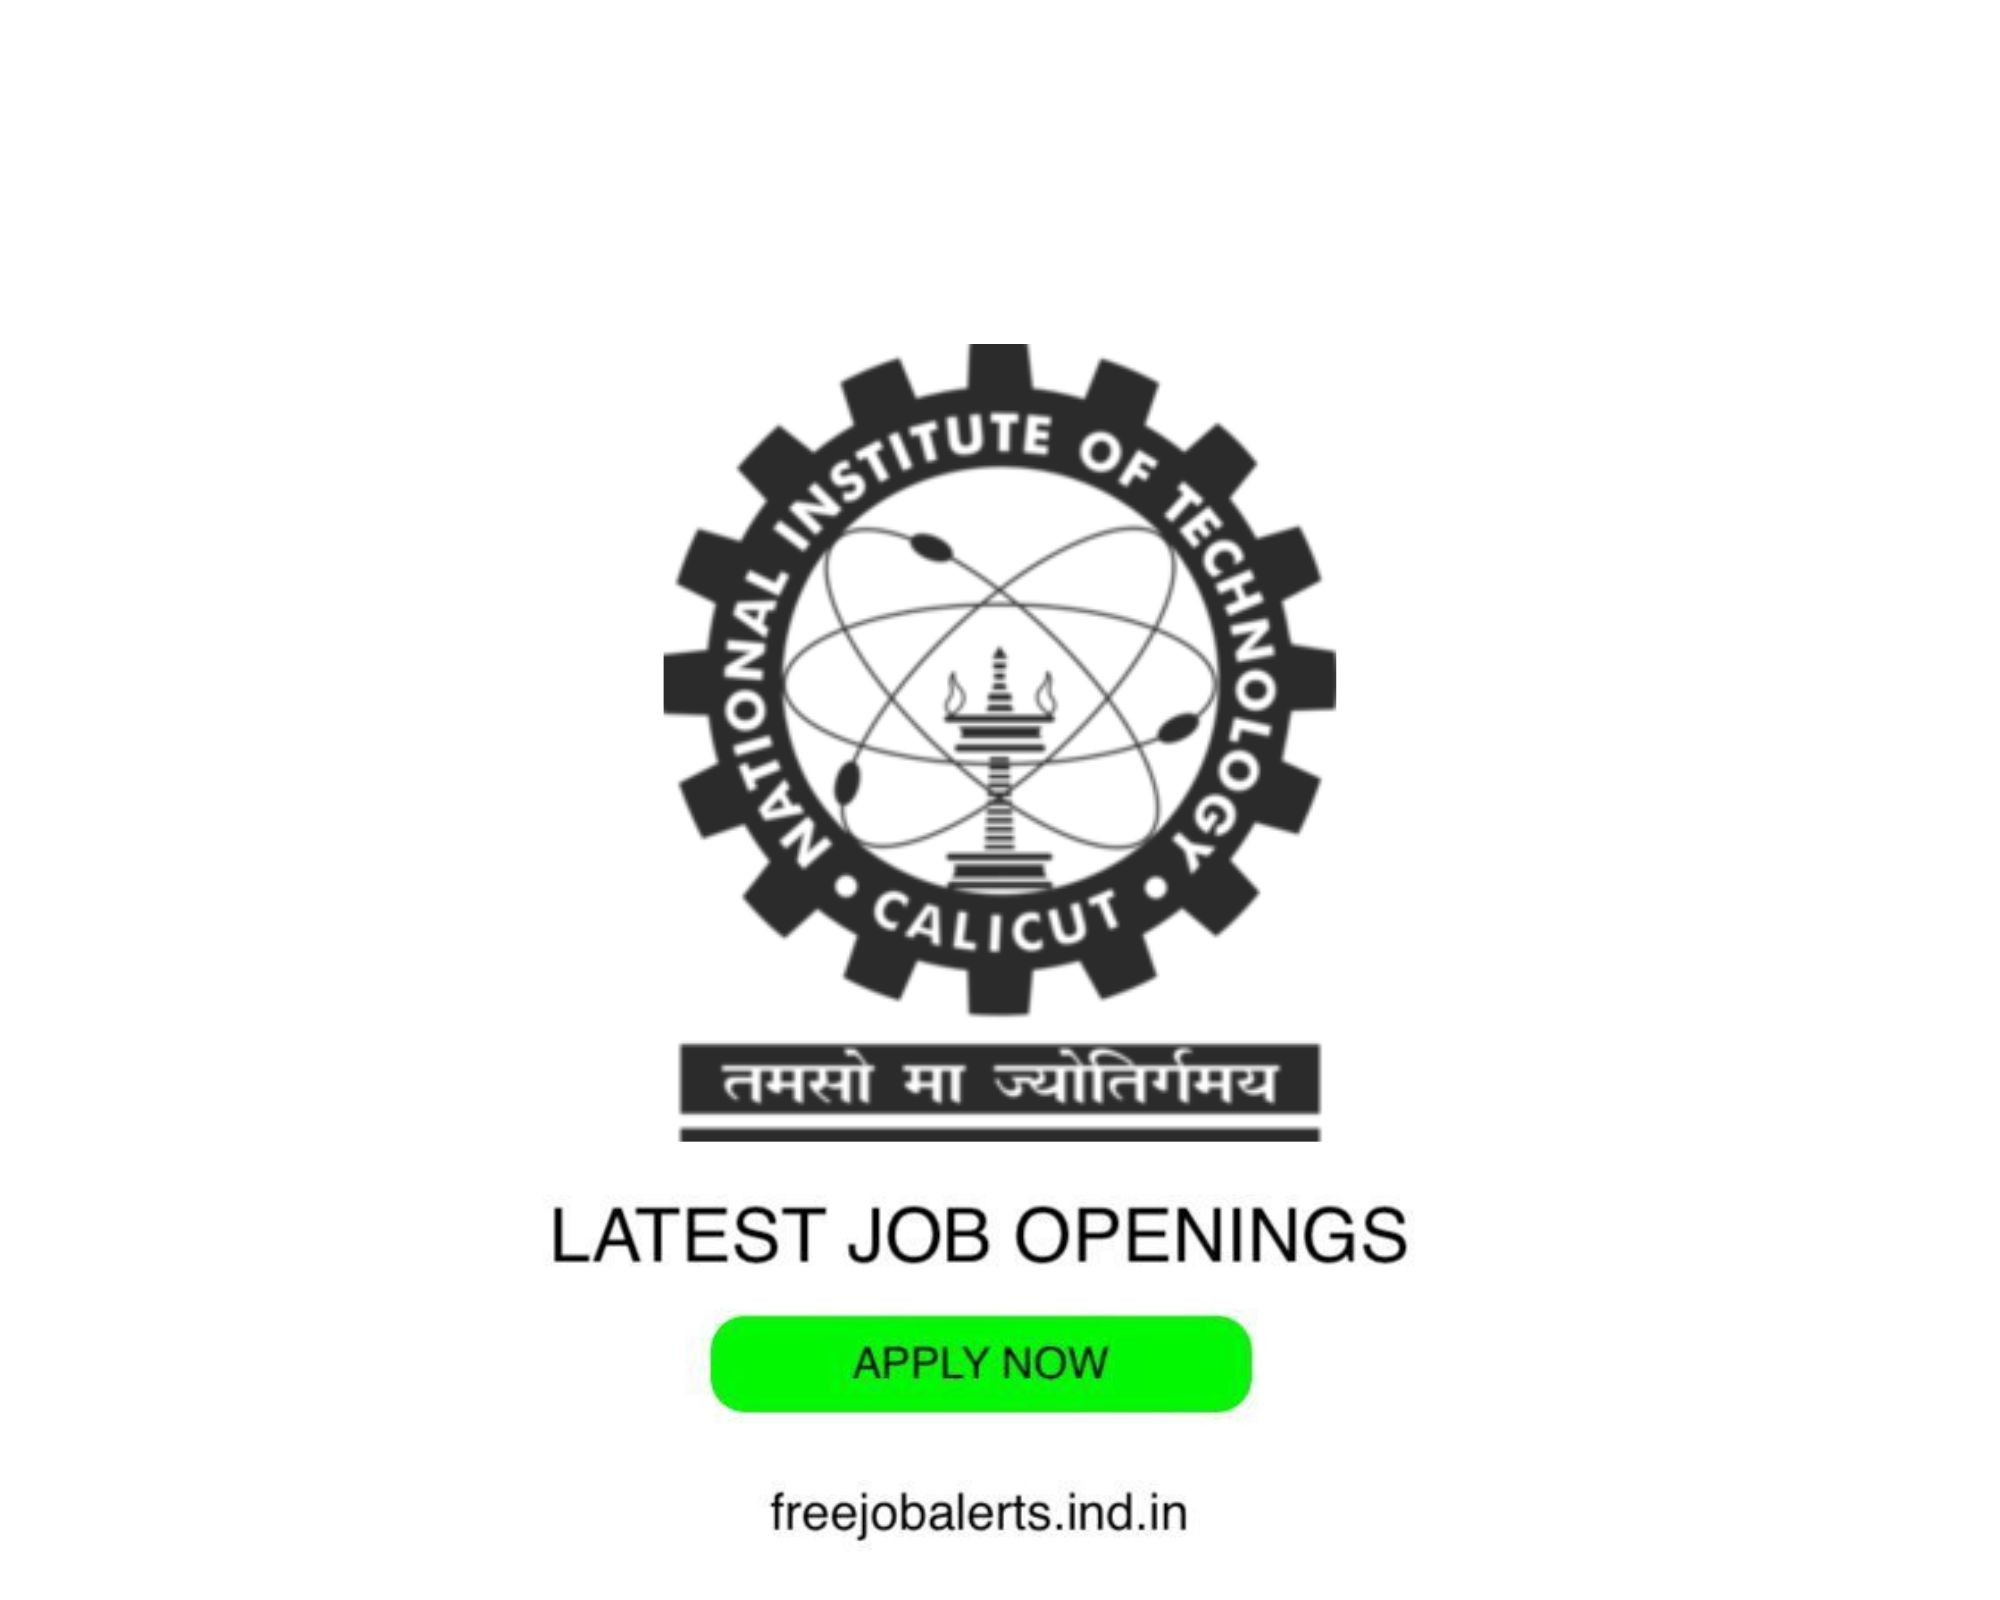 NIT - National Institute of Technology Calicut - Latest Govt job openings - Free job alerts, Indian Govt Jobs